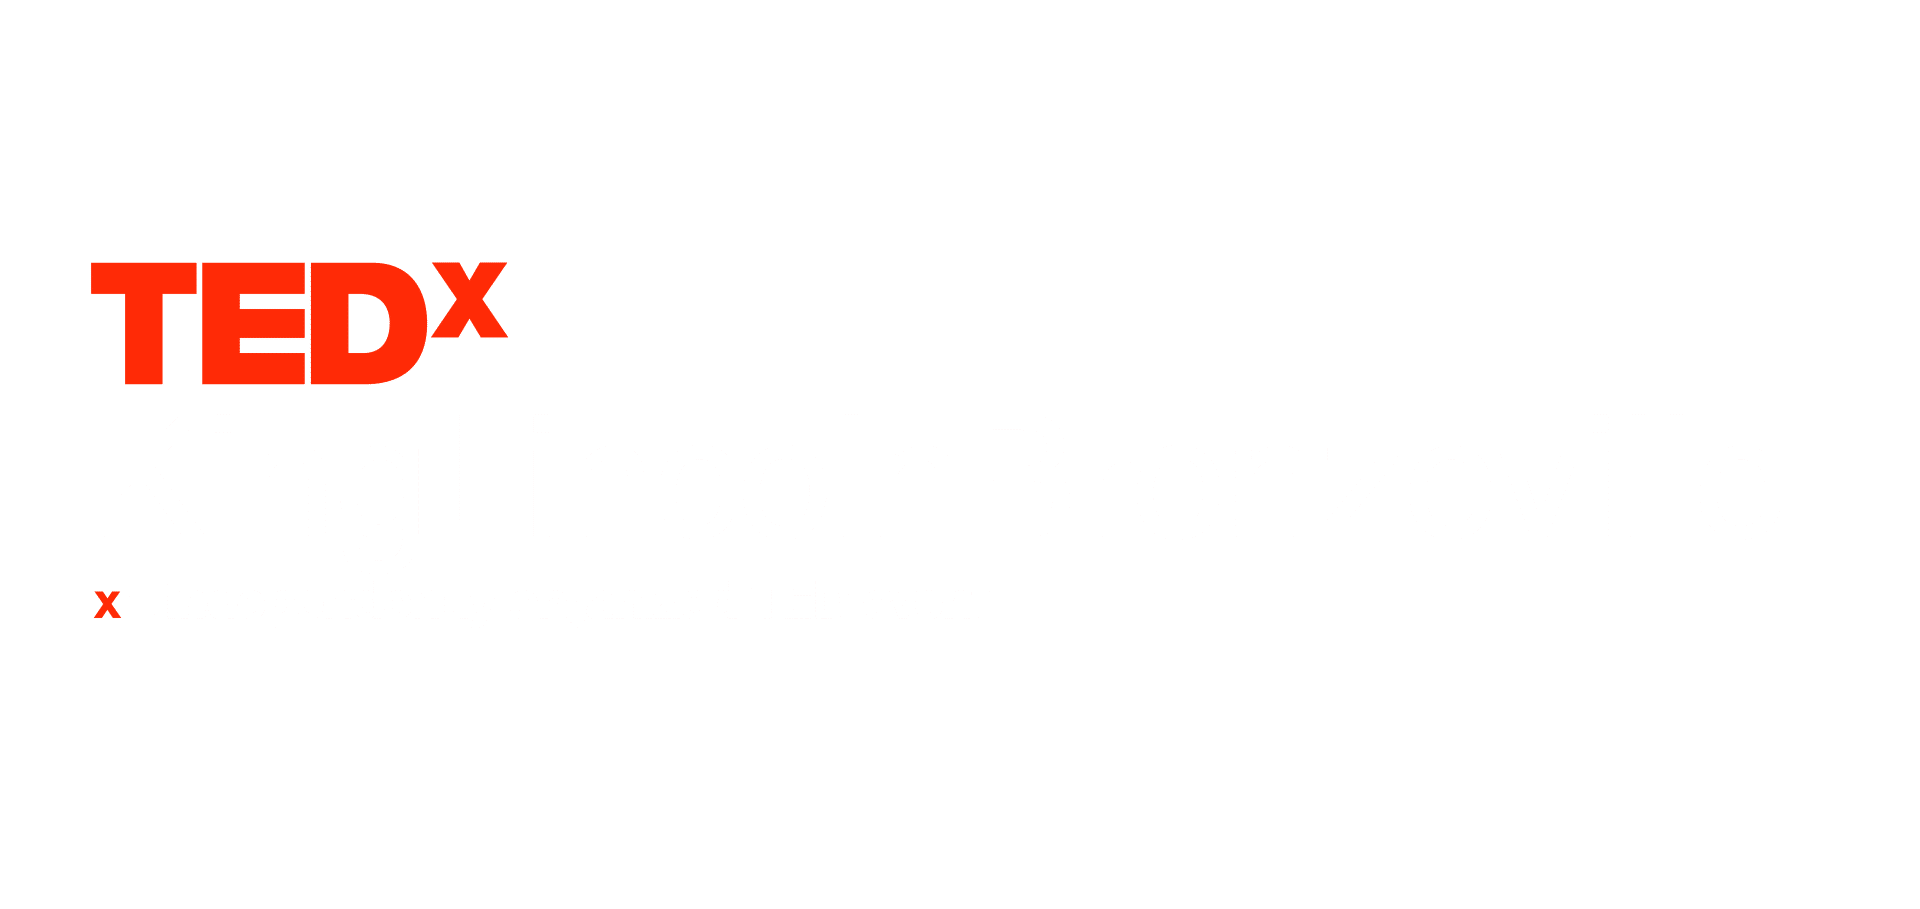 TEDx KingLincolnBronzeville